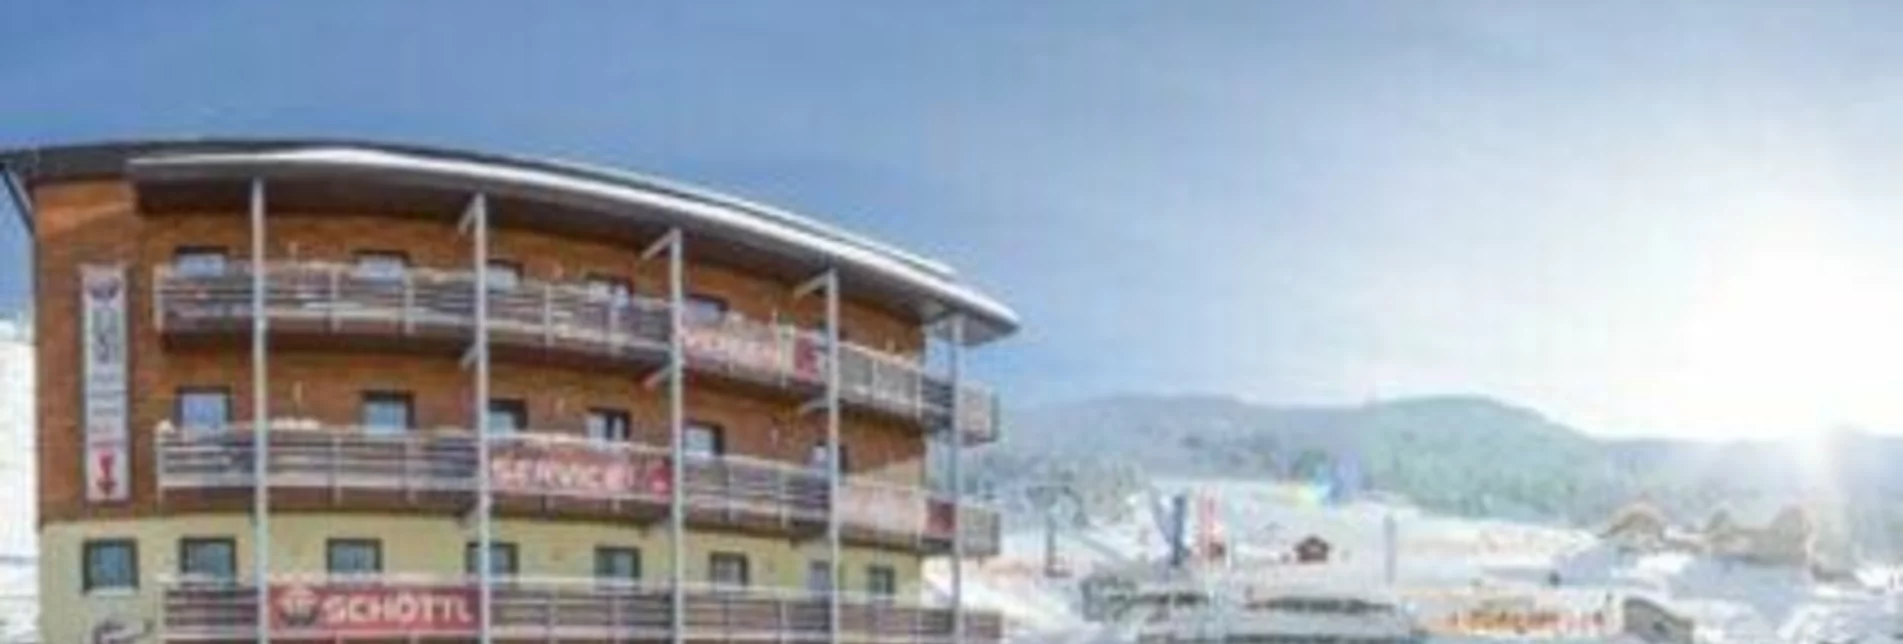 Sledding Ski rental at Sport Schöttl Planneralm - Touren-Impression #1